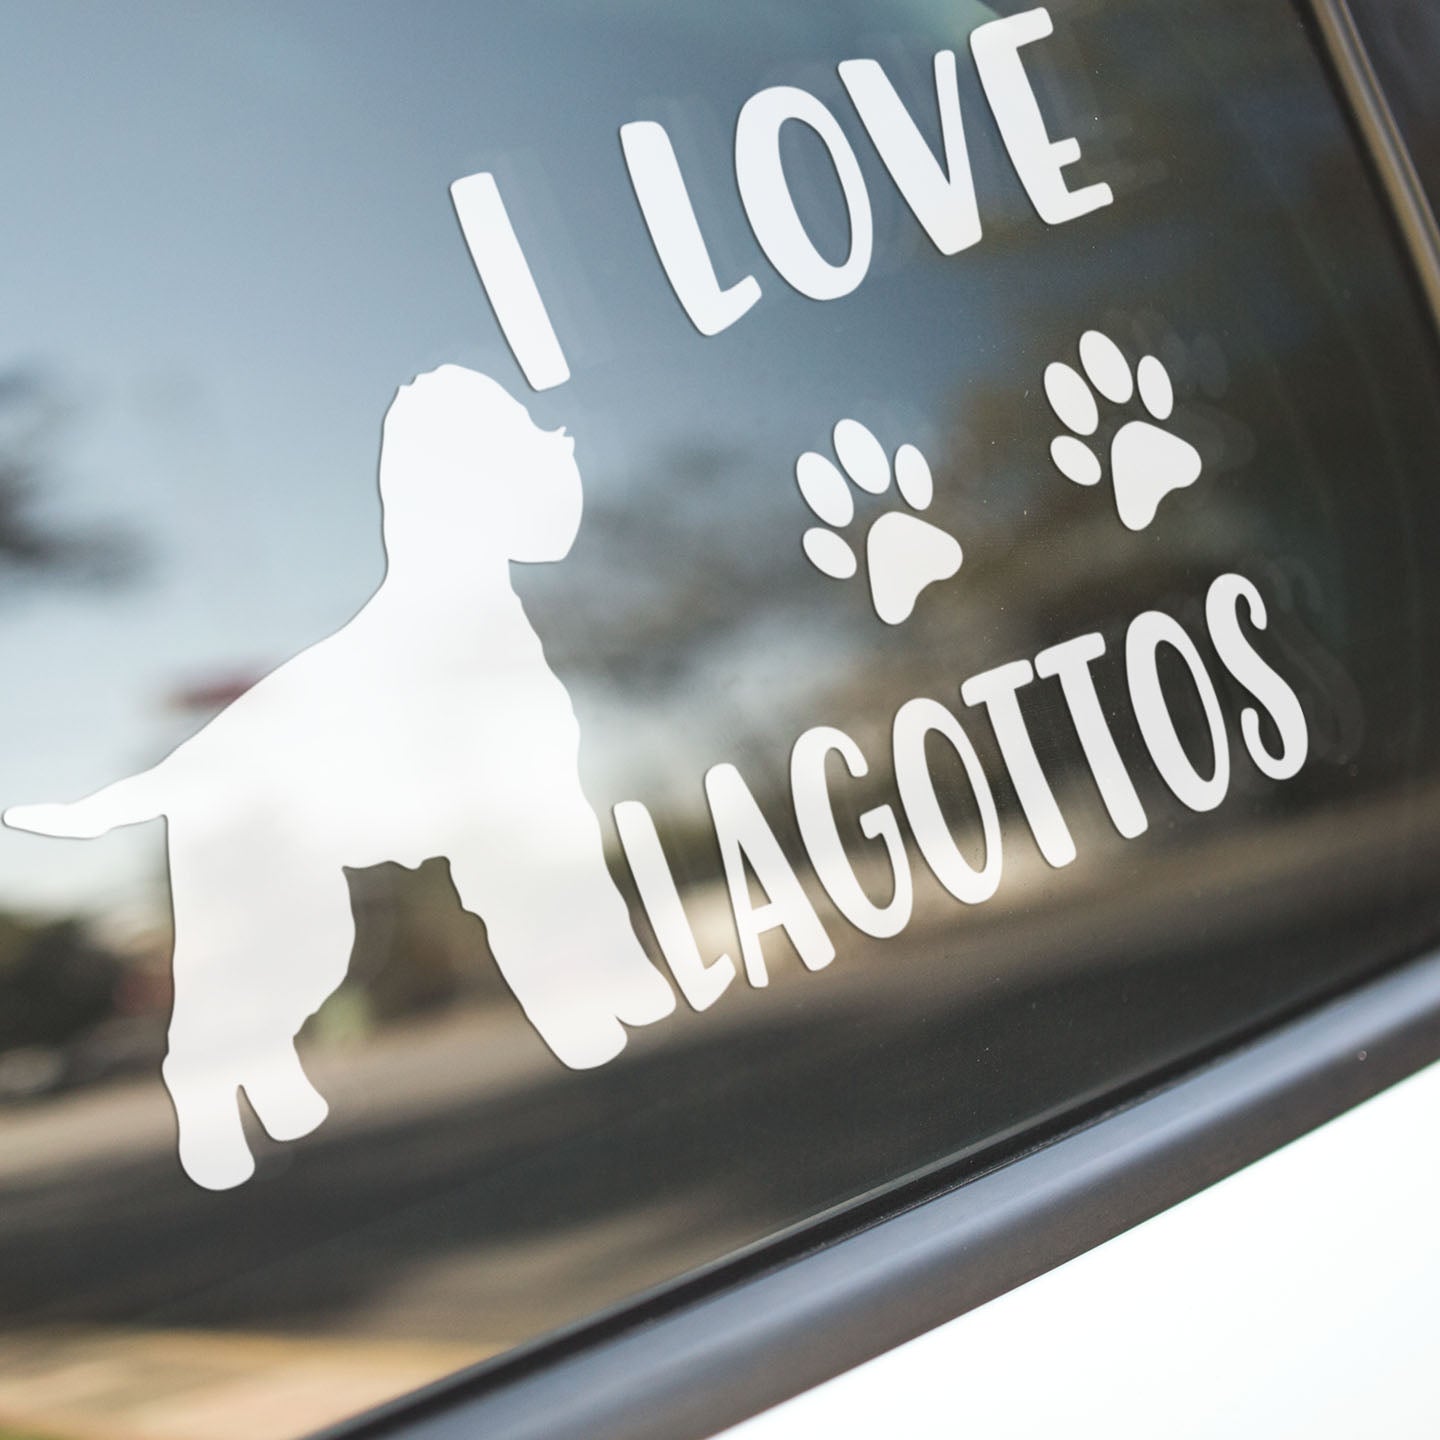 I Love Lagottos Sticker